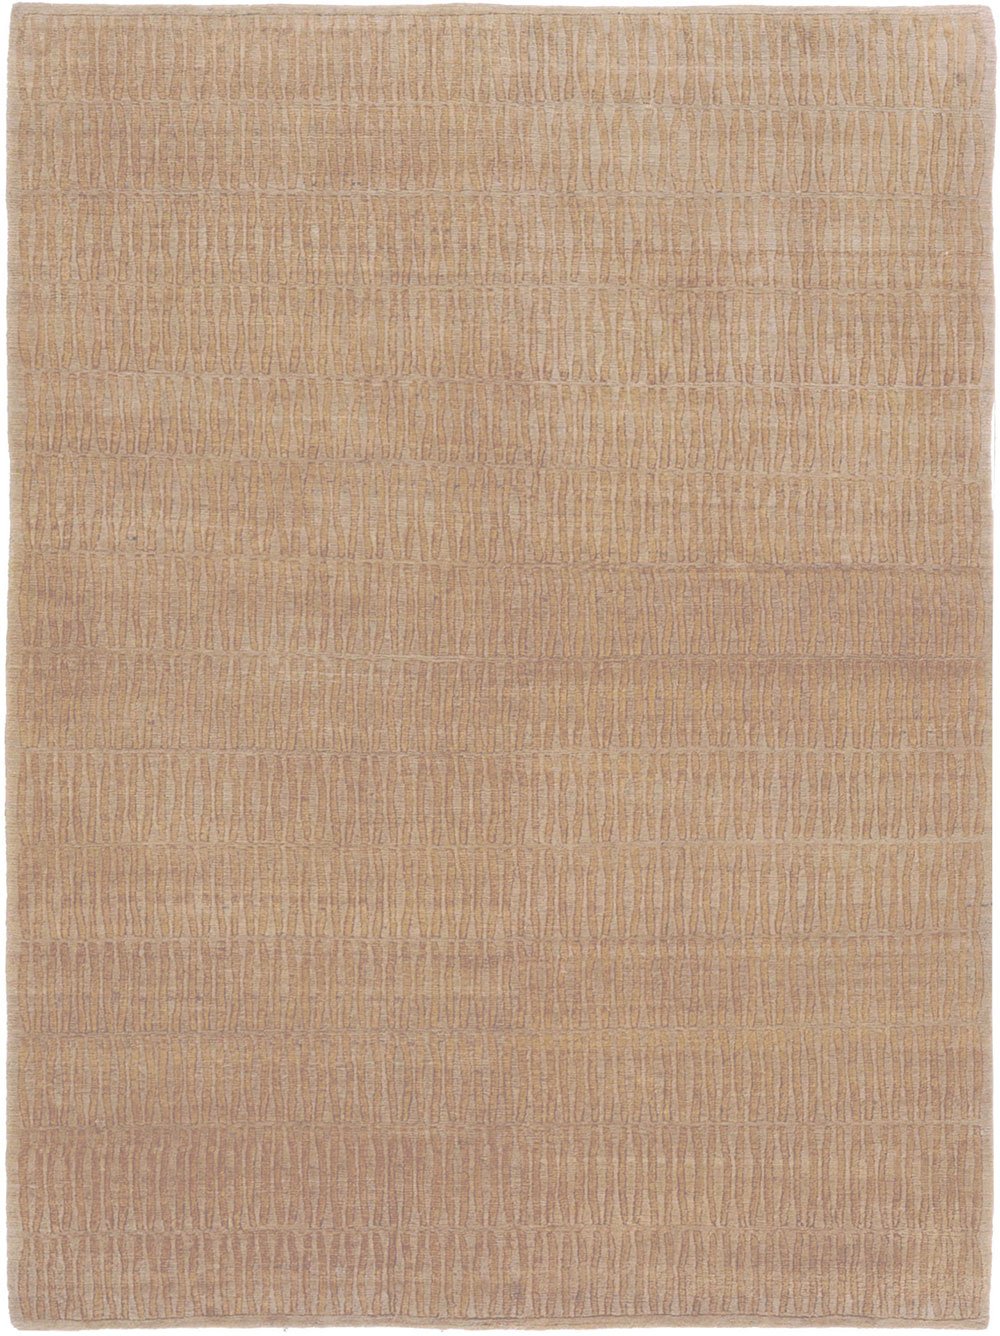 La Datina Odegard exclusive carpets